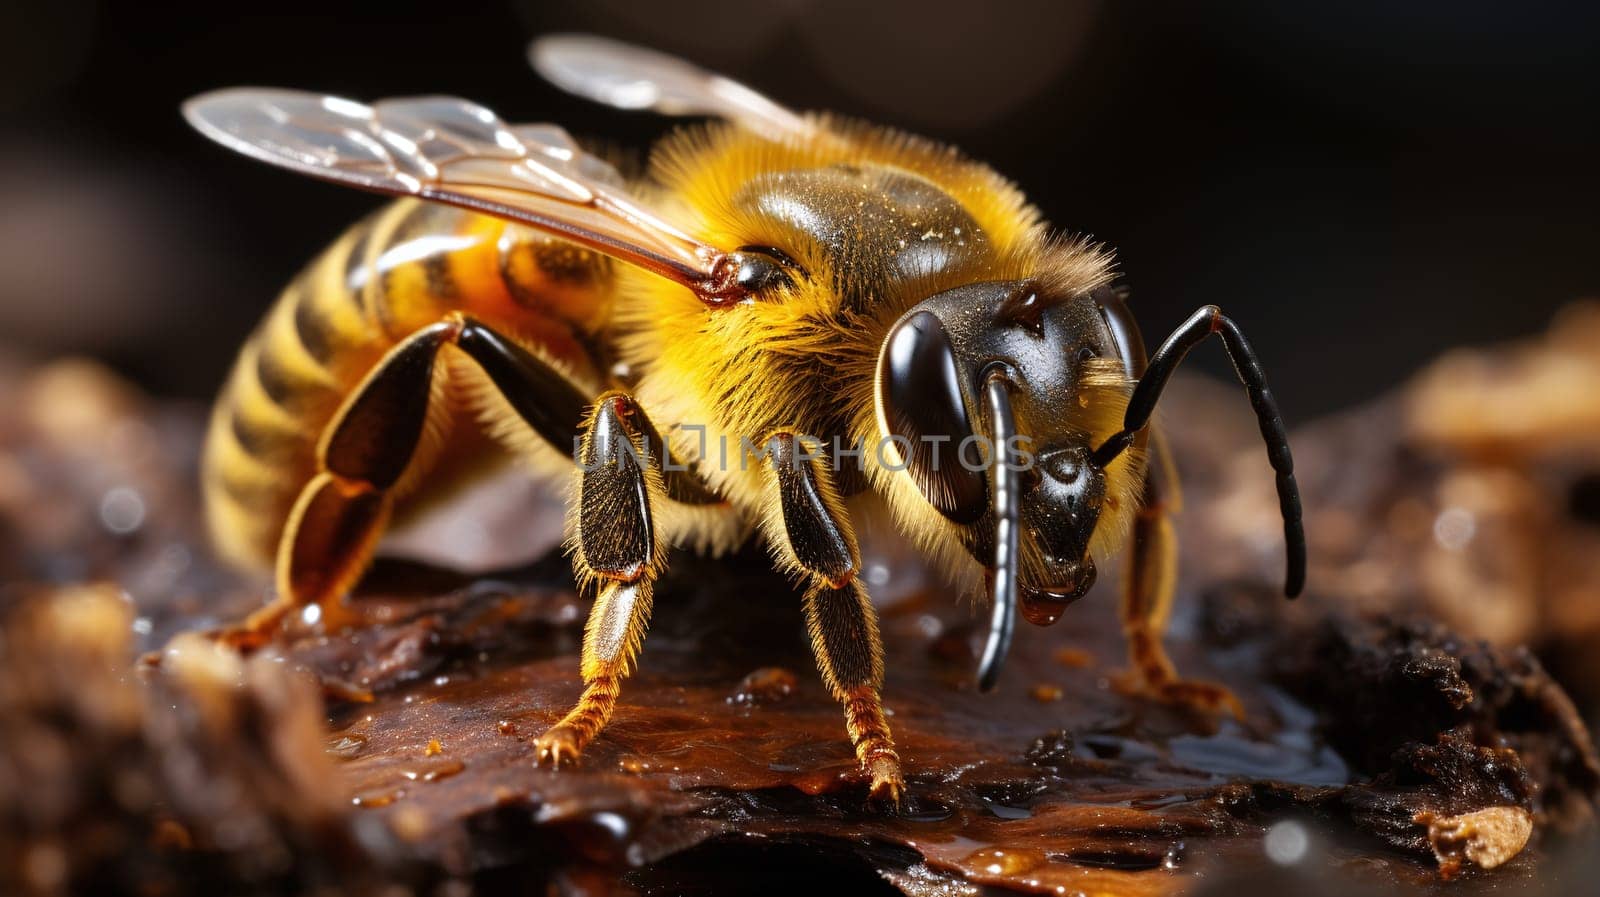 Close-Up of Honeybee Foraging on Tree Sap by chrisroll